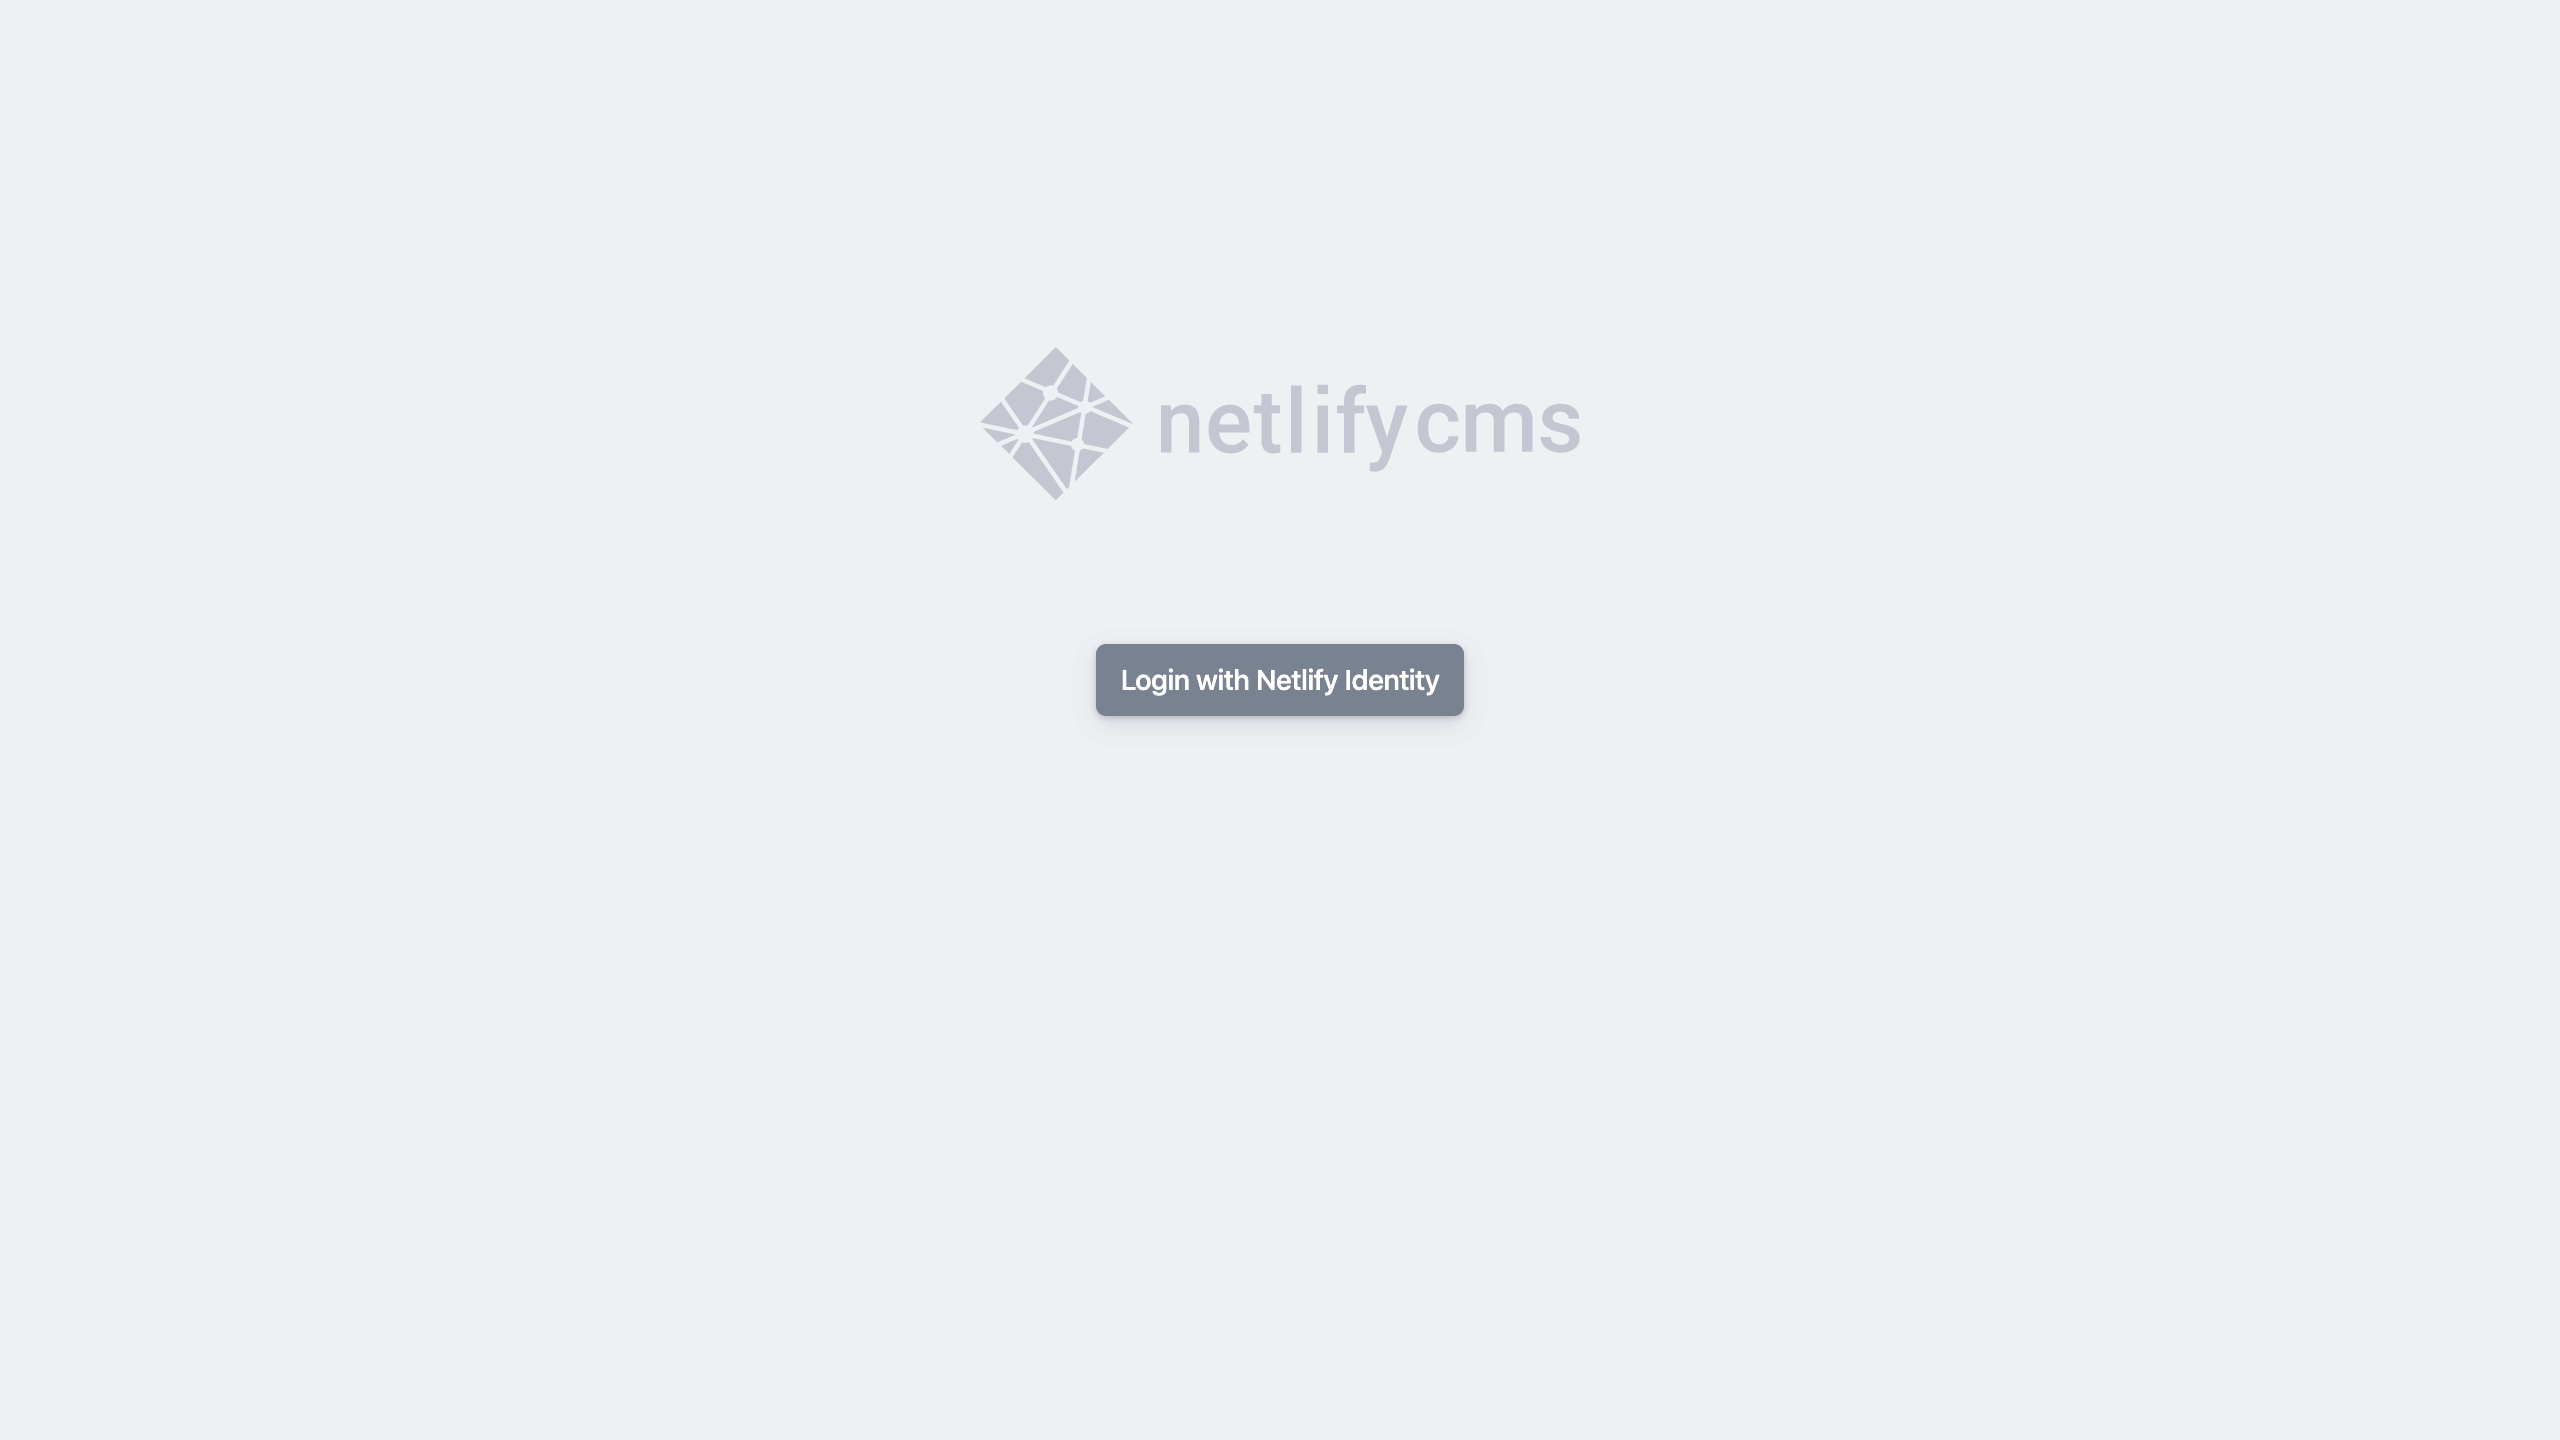 Netlify ログイン画面 スクリーンショット